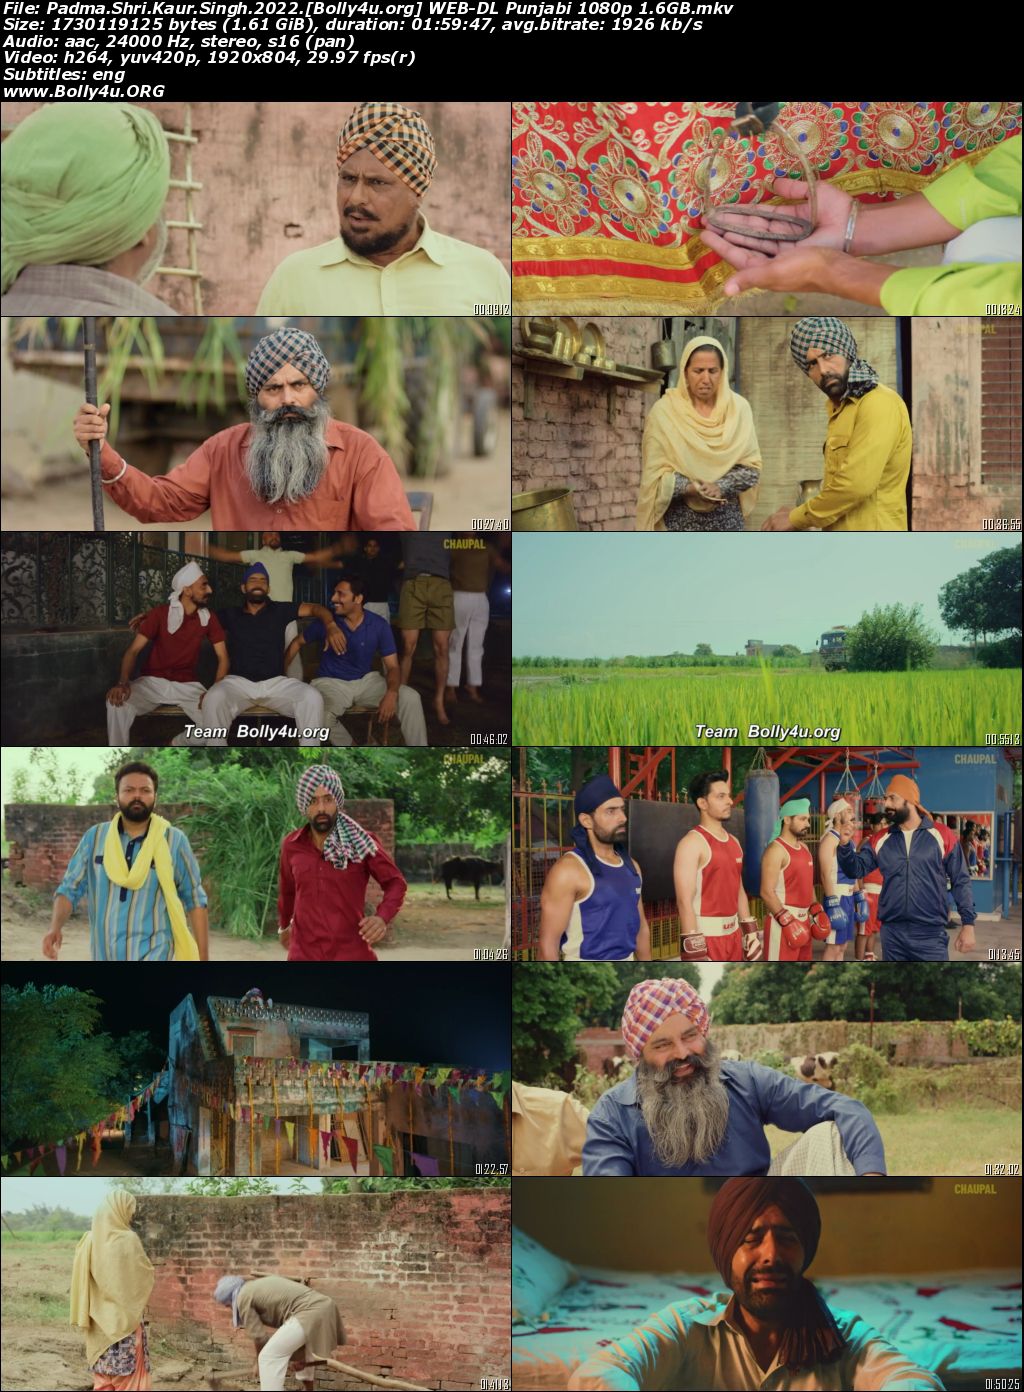 Padma Shri Kaur Singh 2022 WEB-DL Punjabi Full Movie Download 1080p 720p 480p